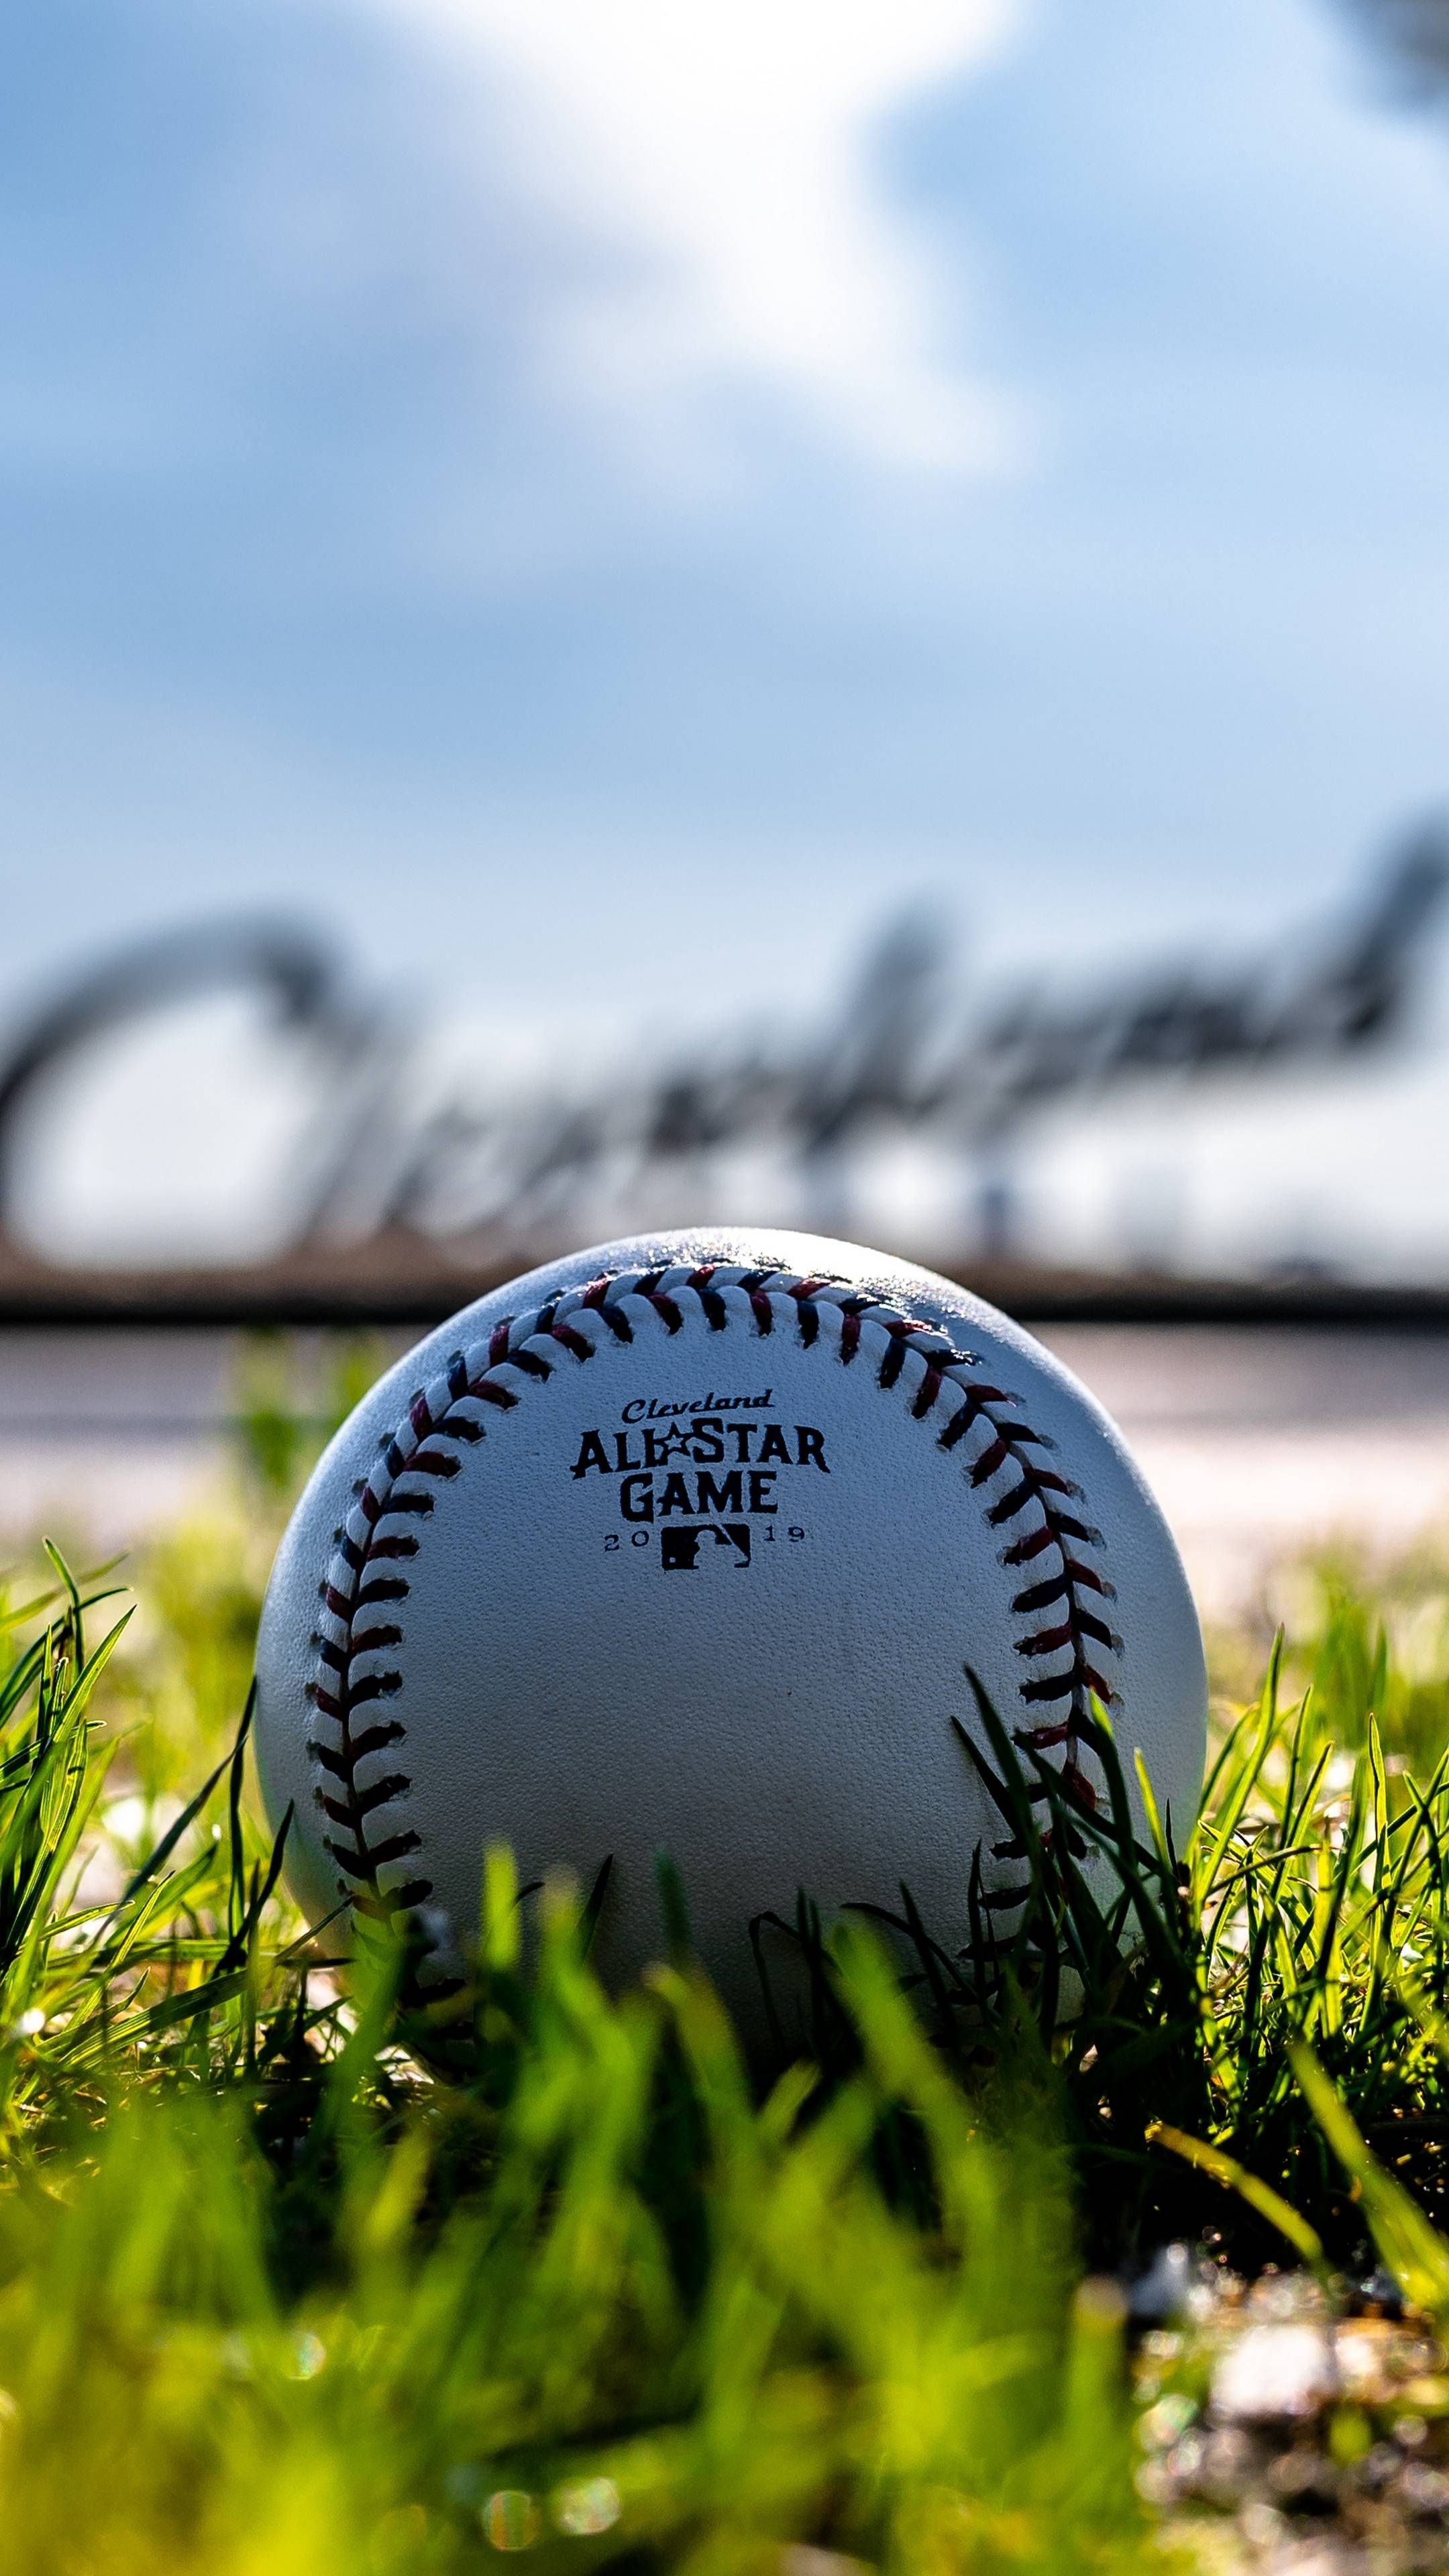 Softball: The Major League Baseball All-Star Game ball, Competitive sport. 2160x3840 4K Background.